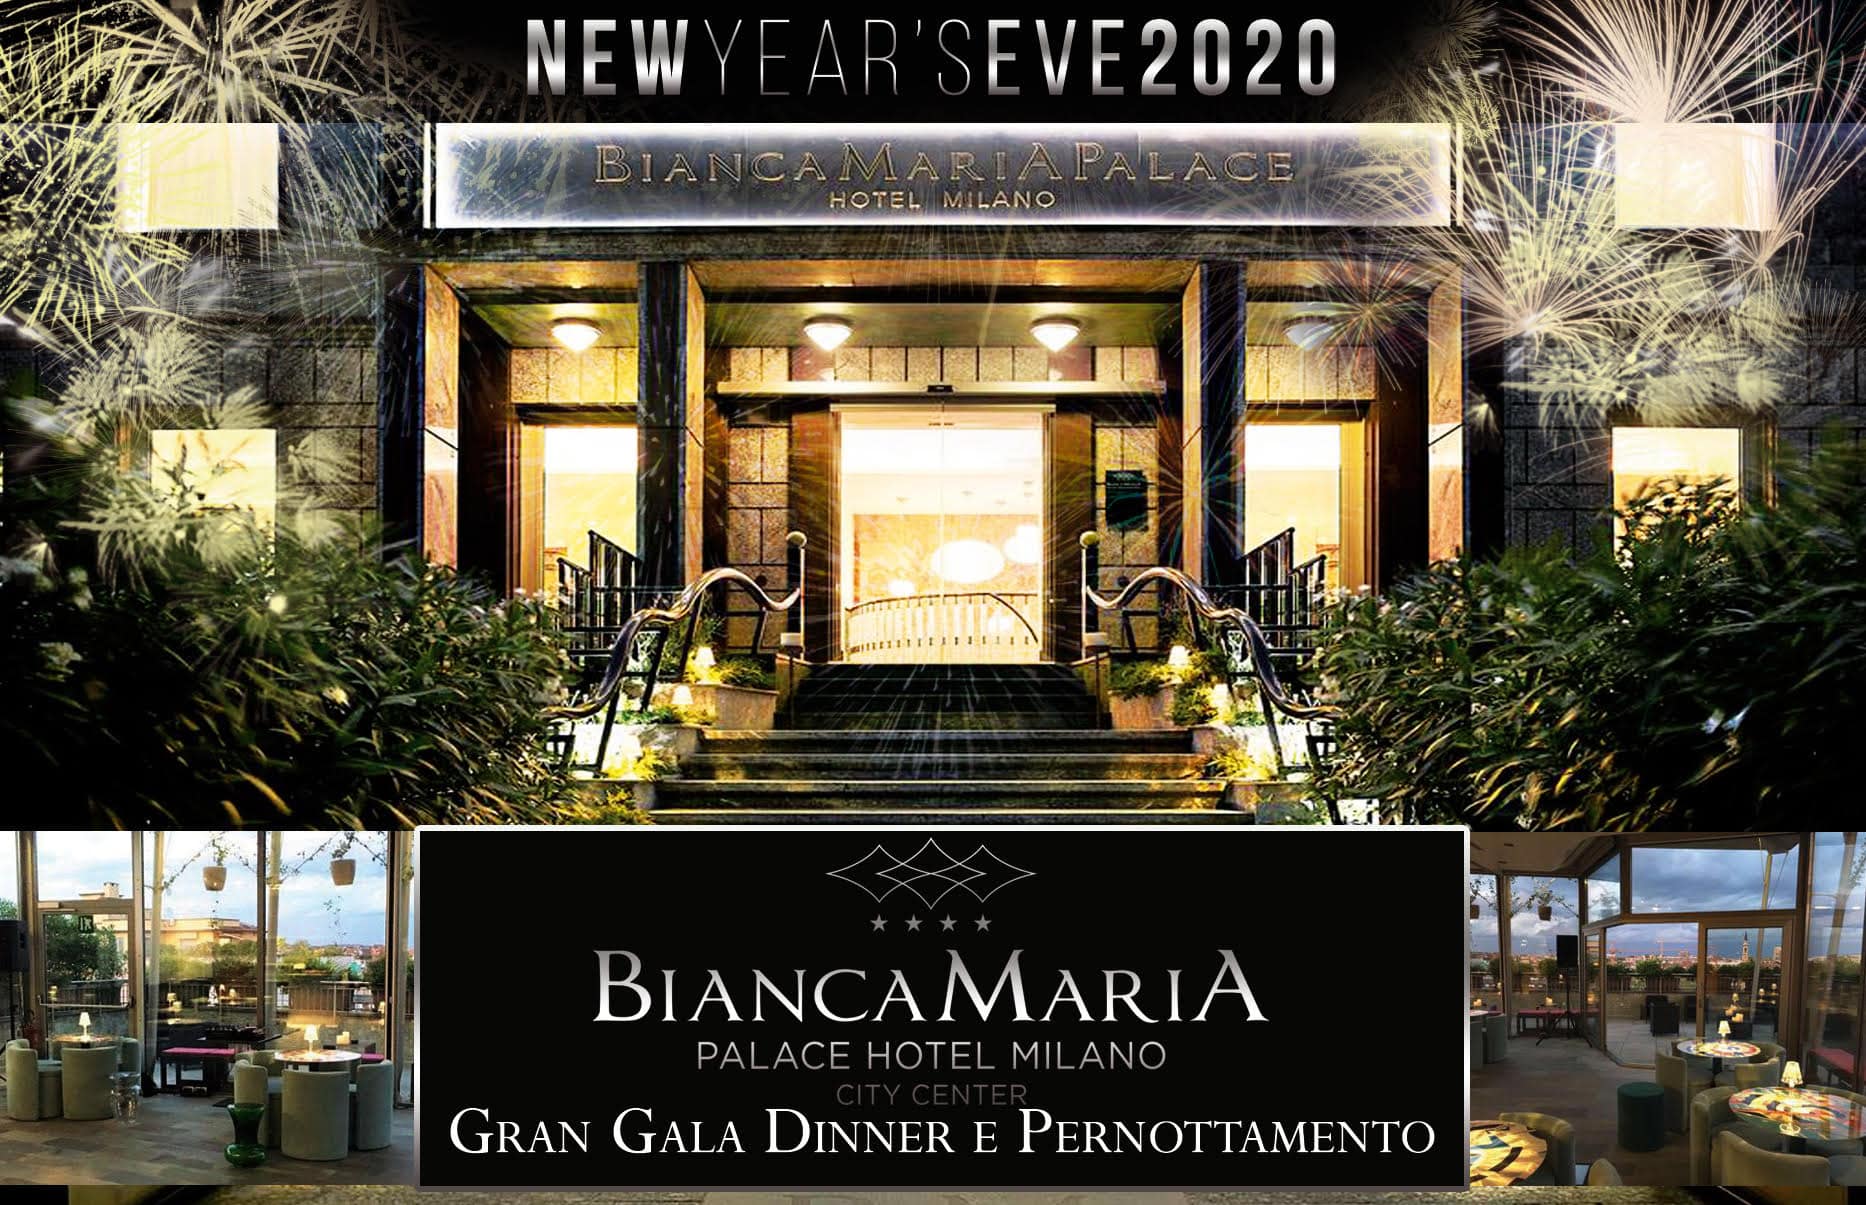 Bianca Maria Palace Hotel Milano 2020